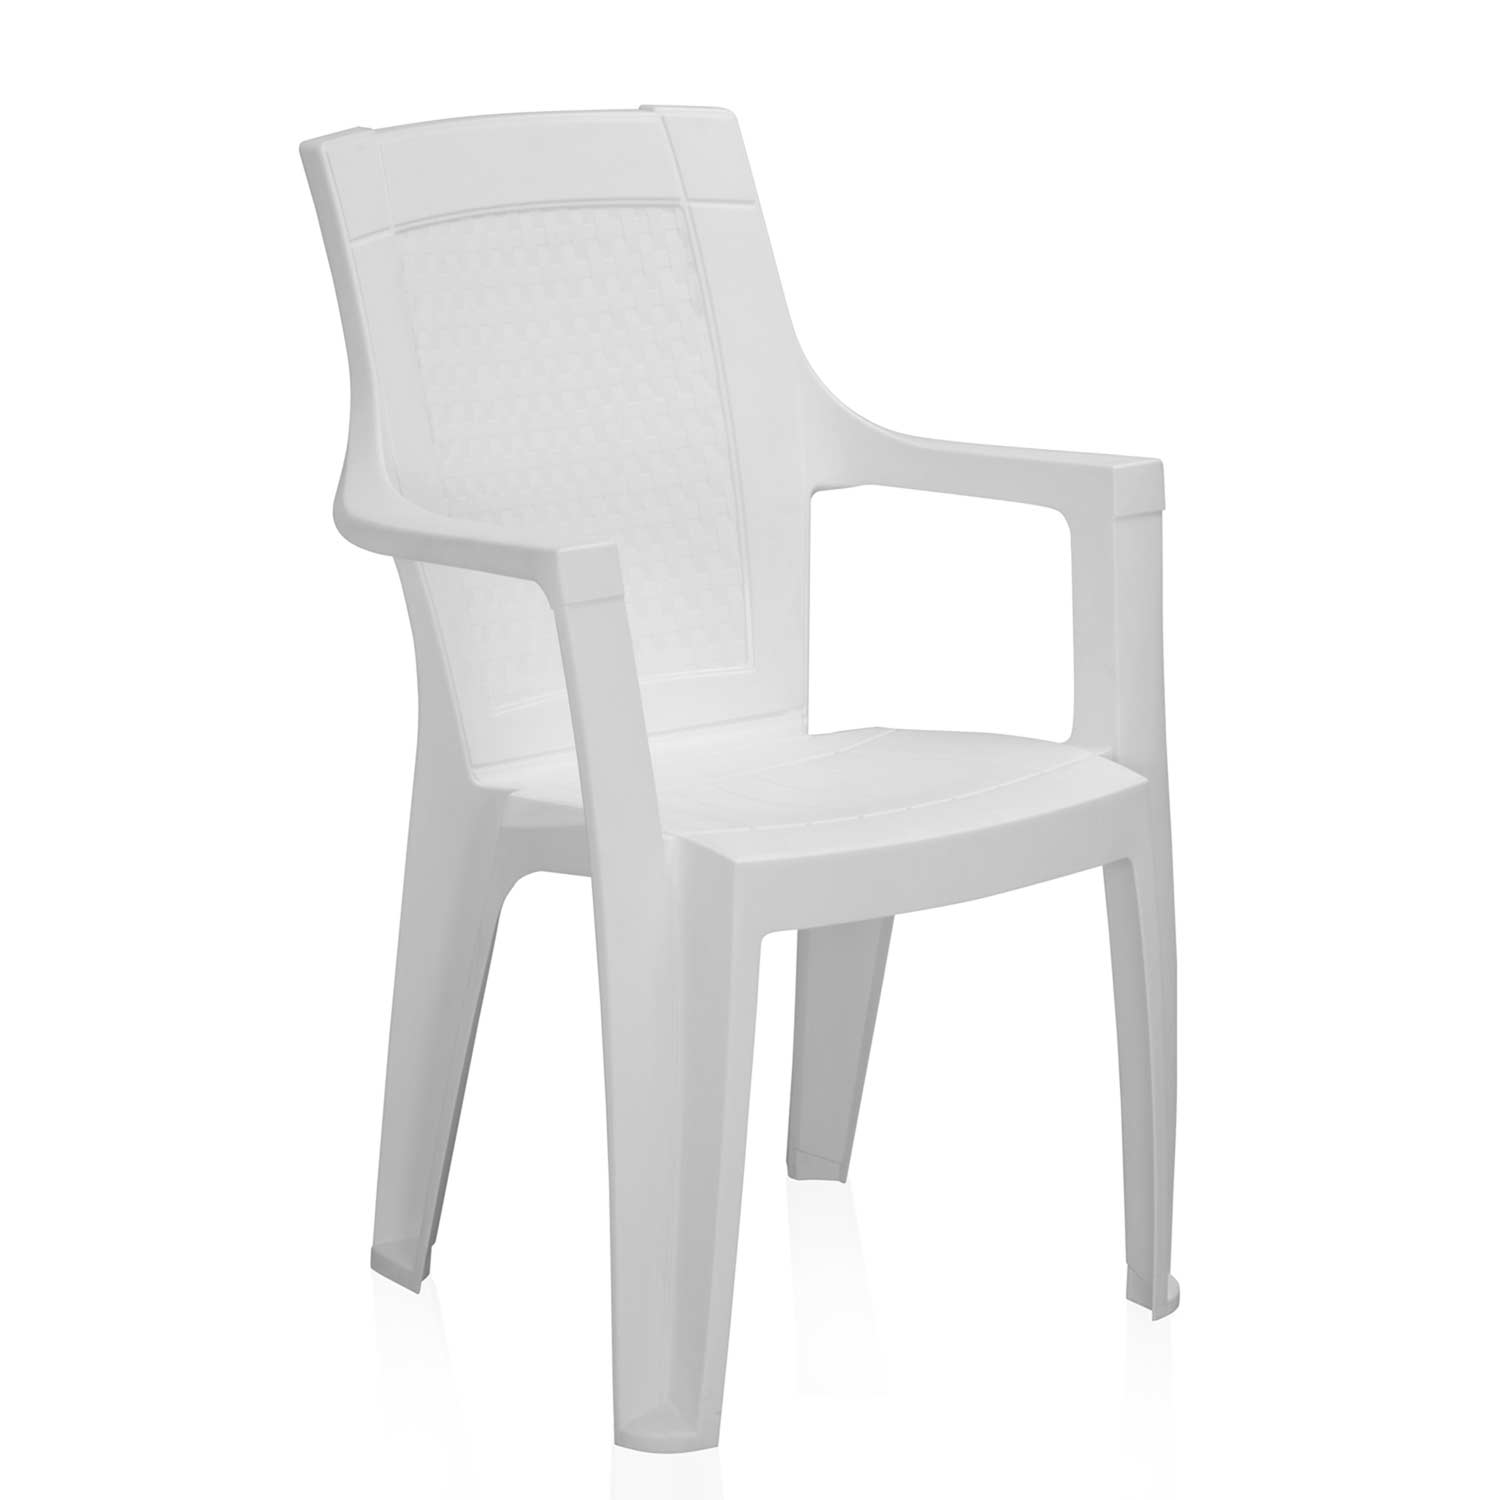 Nilkamal Plastic Chair with Arm